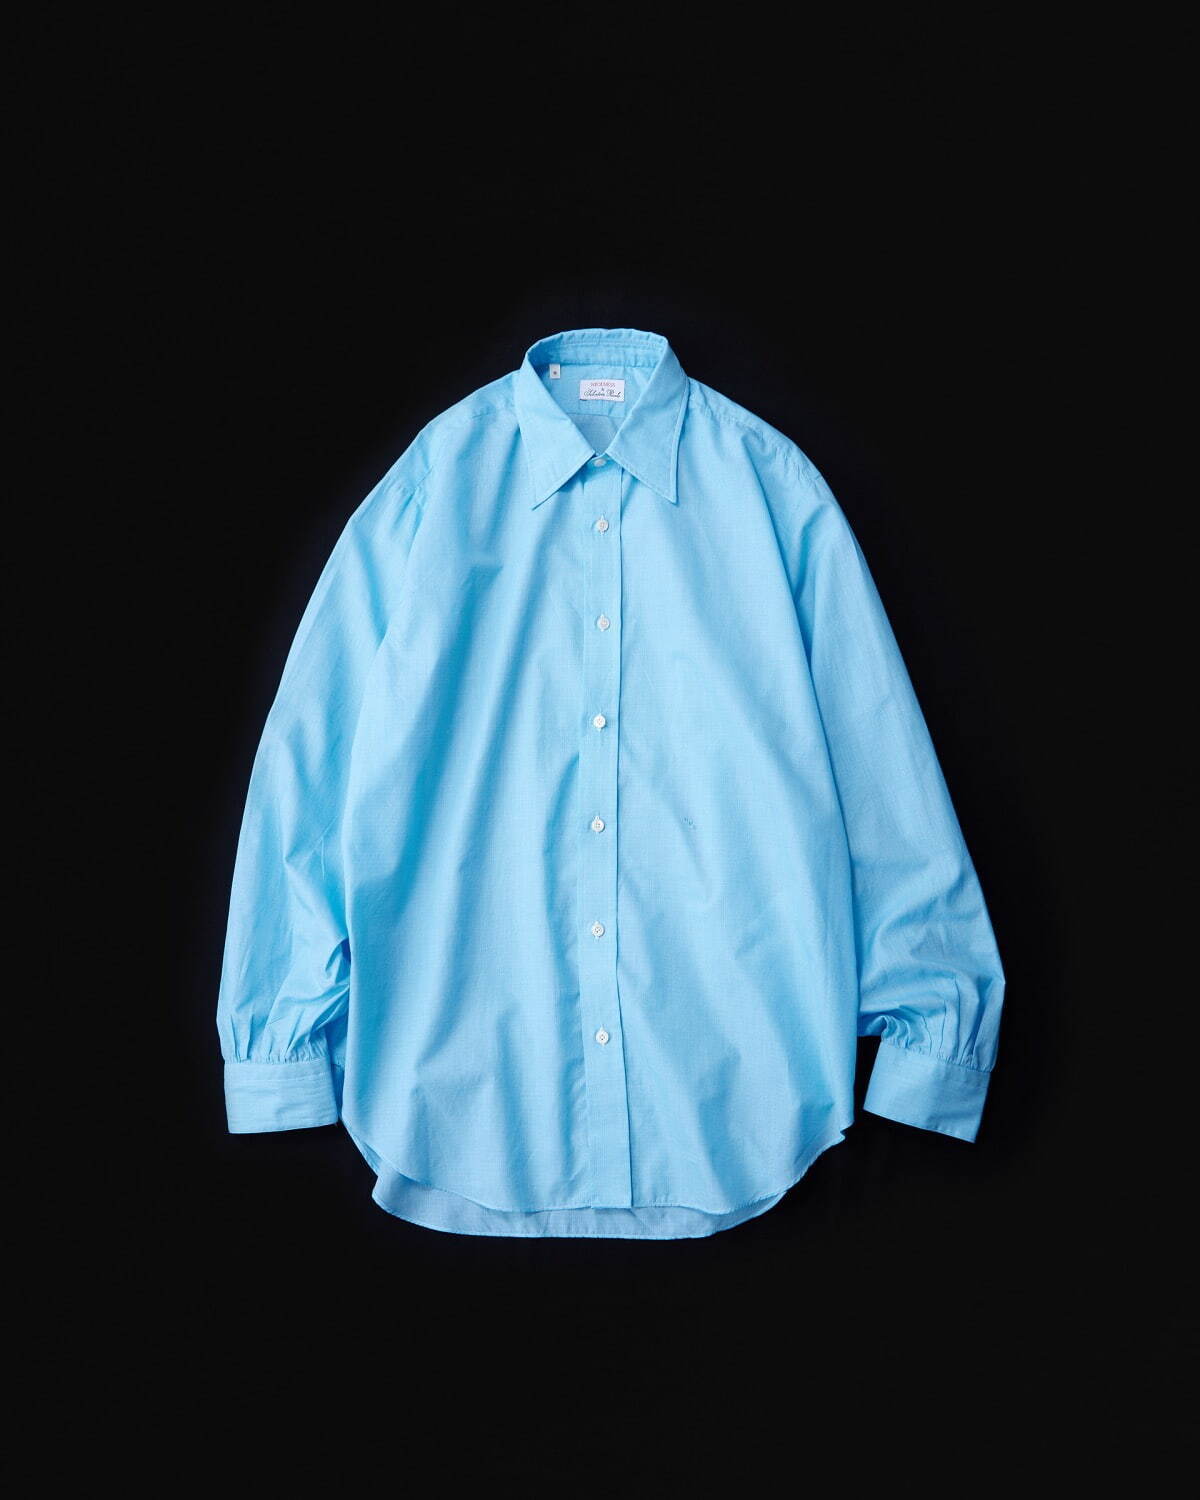 PISANO レギュラーカラードレスシャツ(カルロリーバ) 82,500円